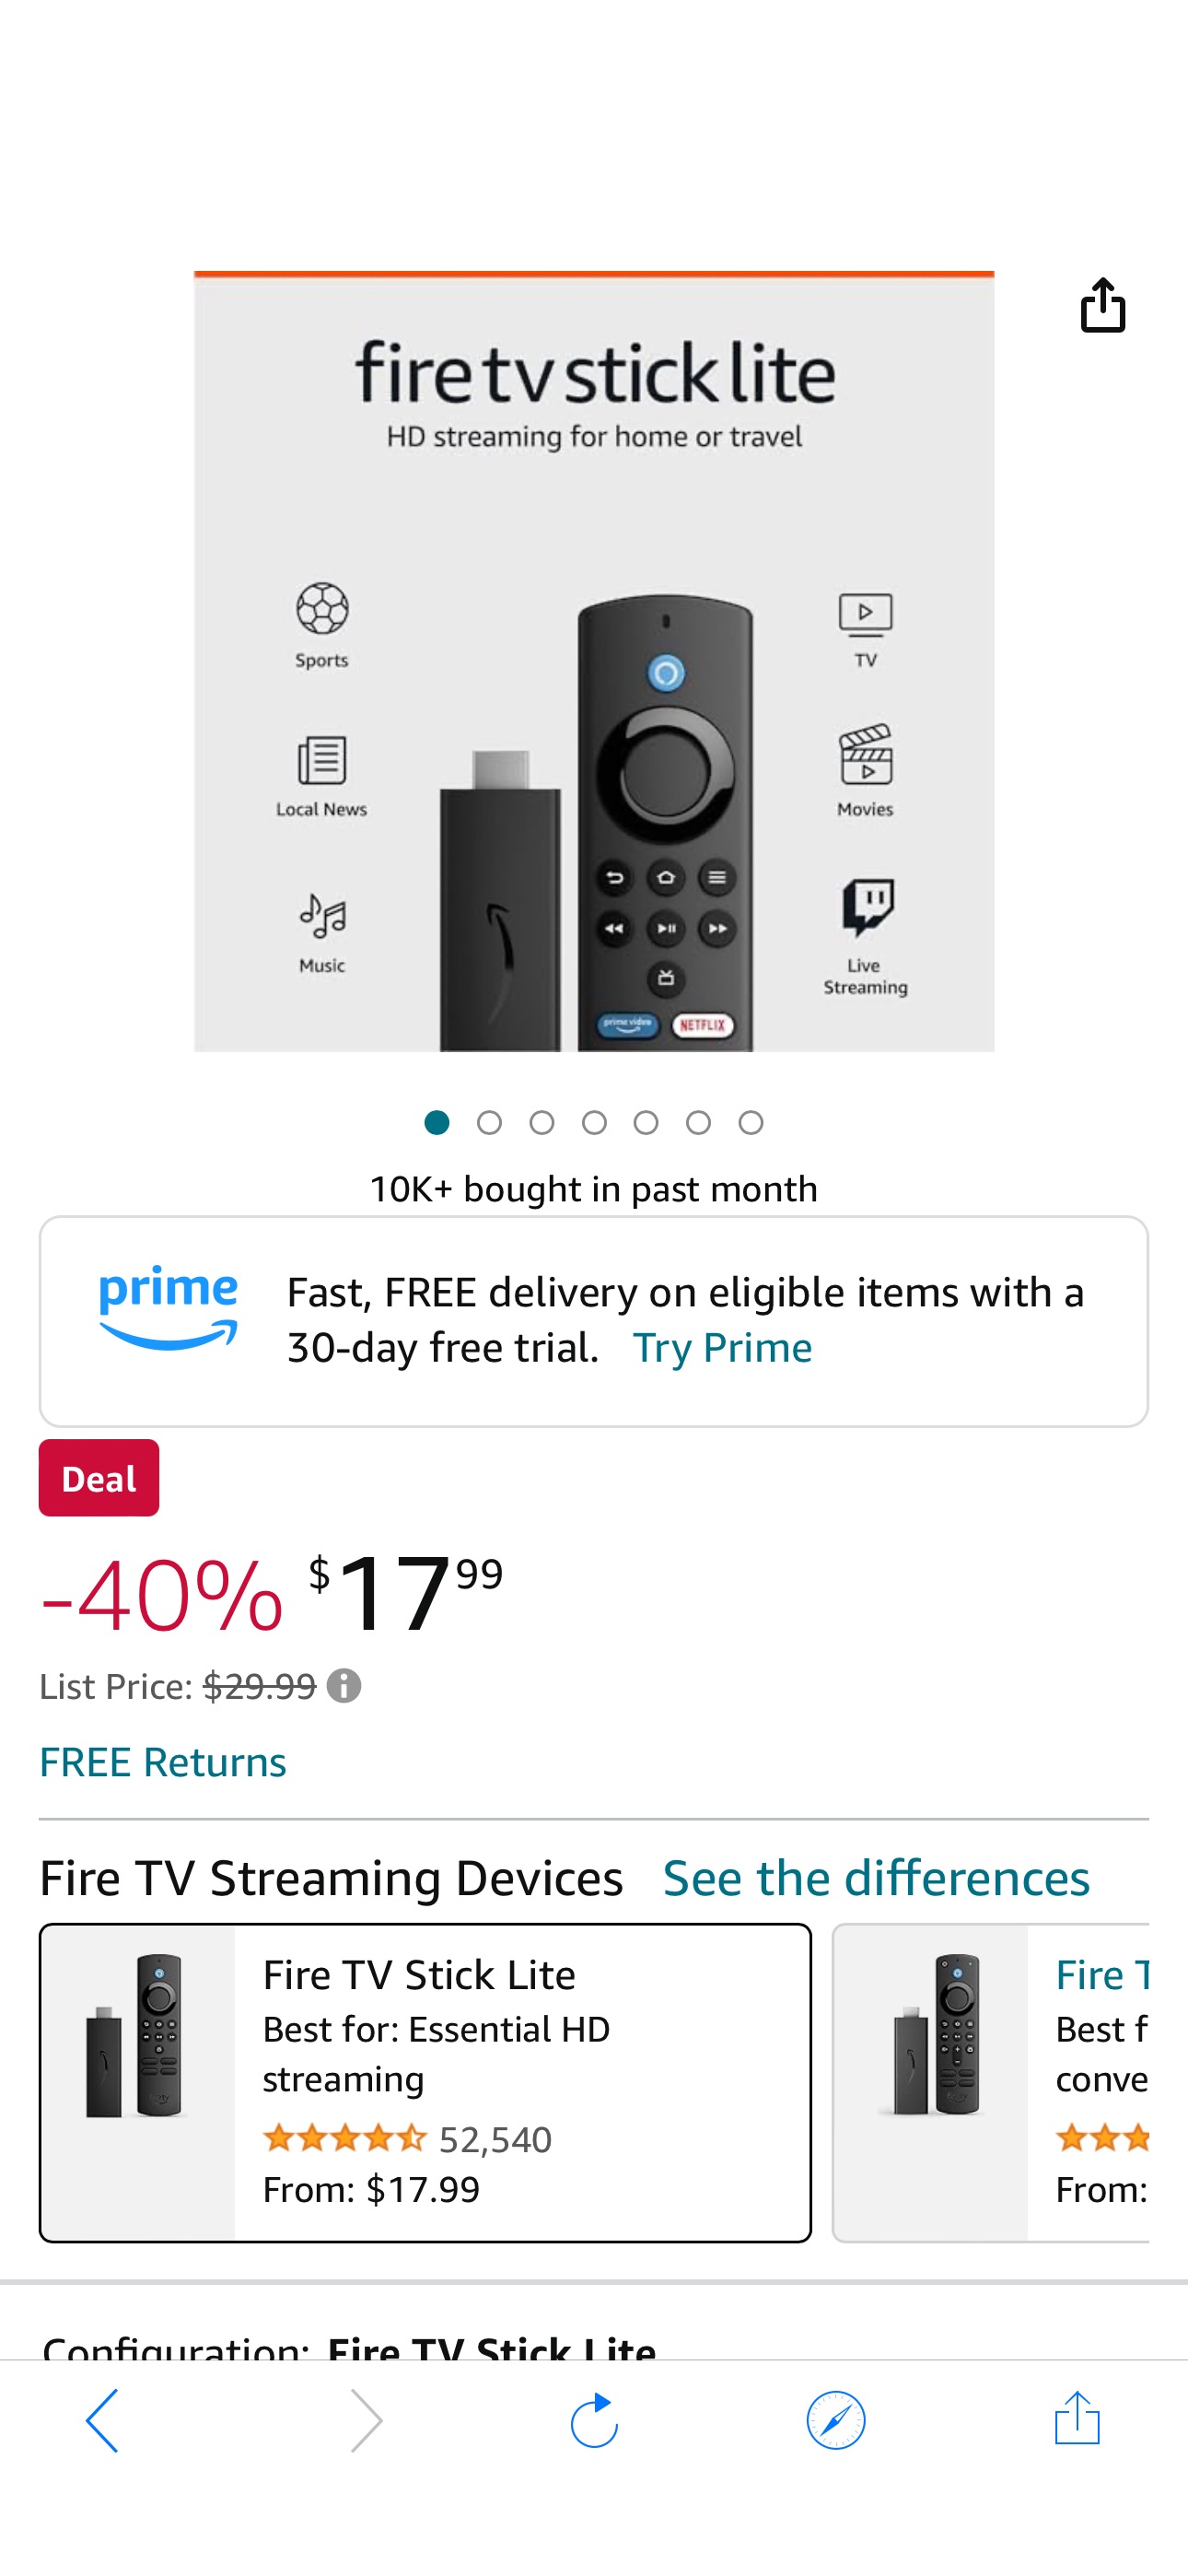 Amazon Fire TV Stick Lite HD streaming device